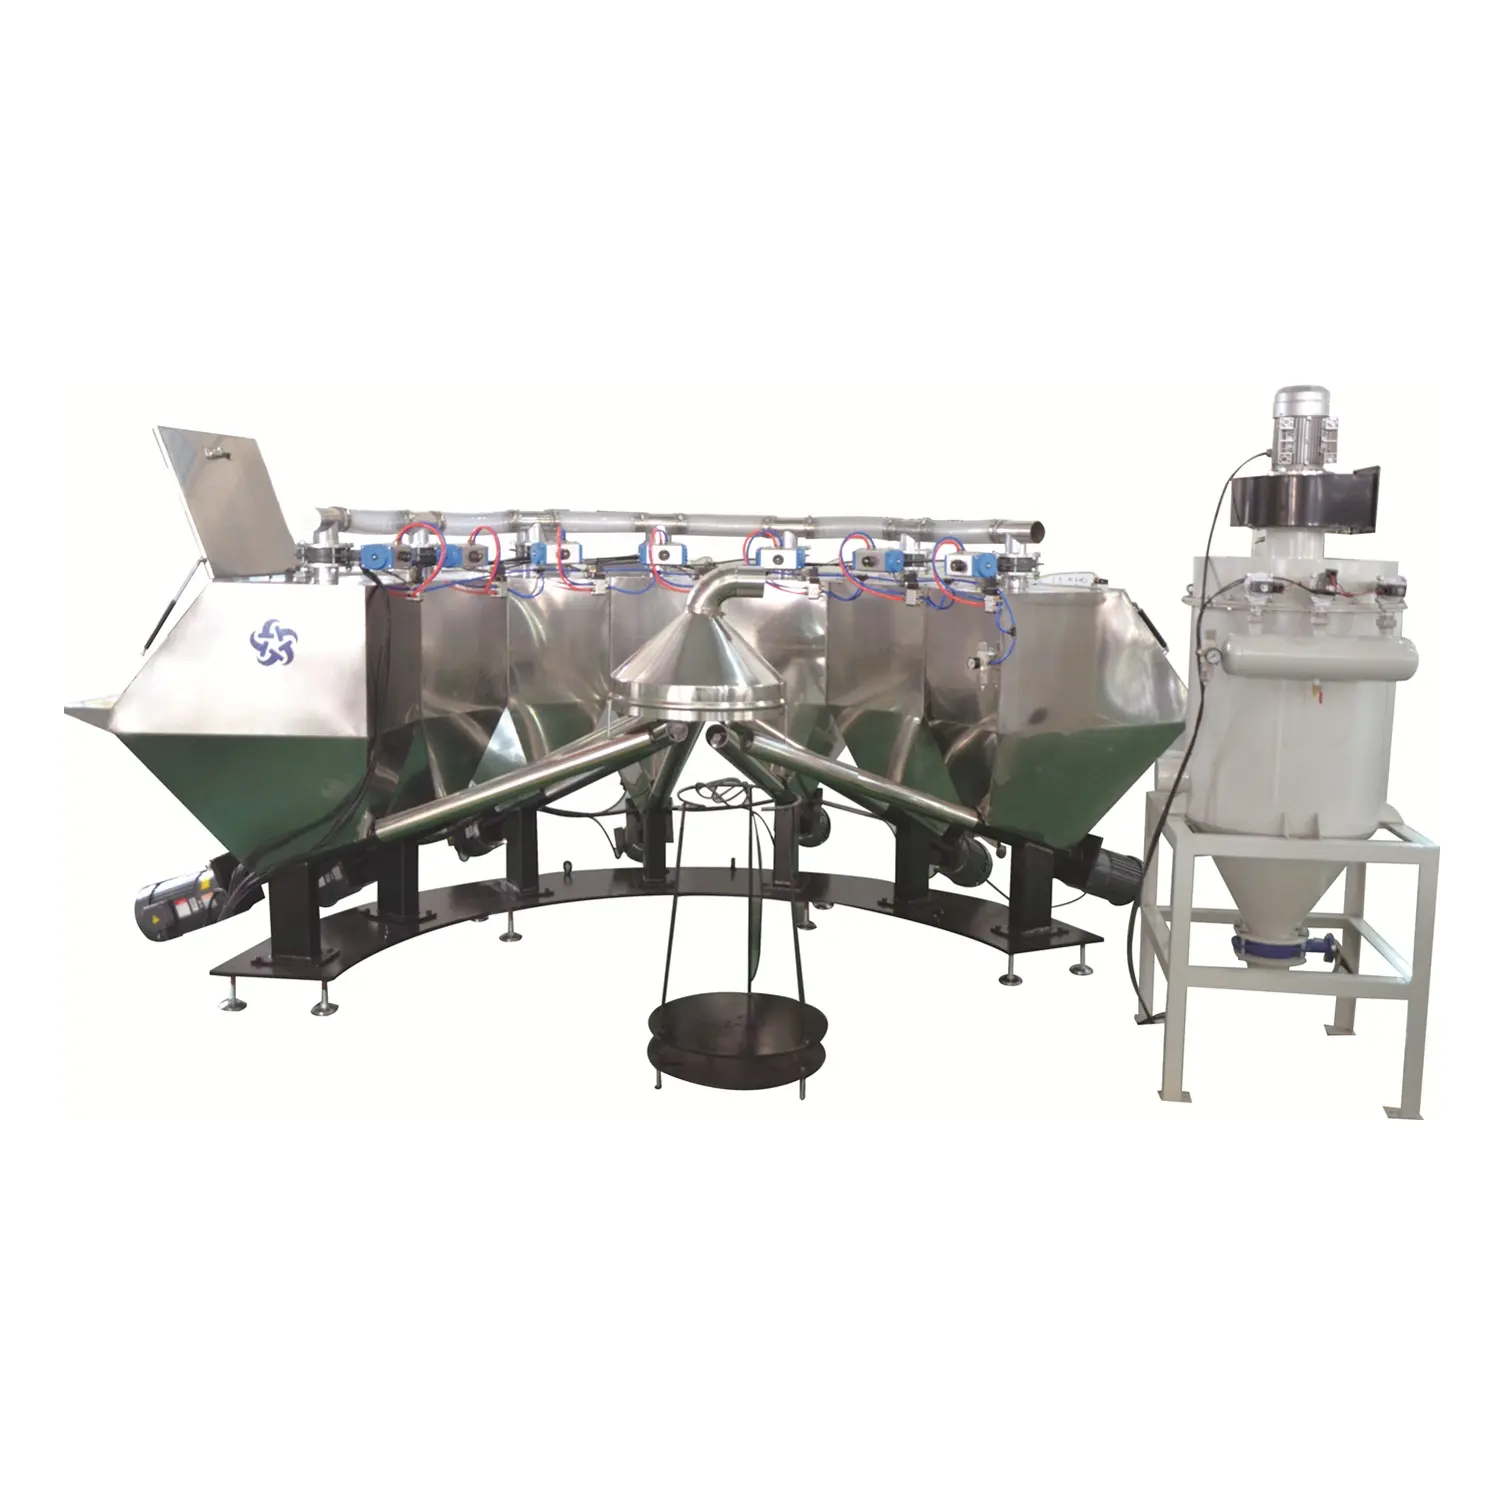 Vacuum Mixing Equipment Industrial Stainless Steel High Performance Inverter Motor Rice Field Irrigation Pump Machine 8-12 Mins